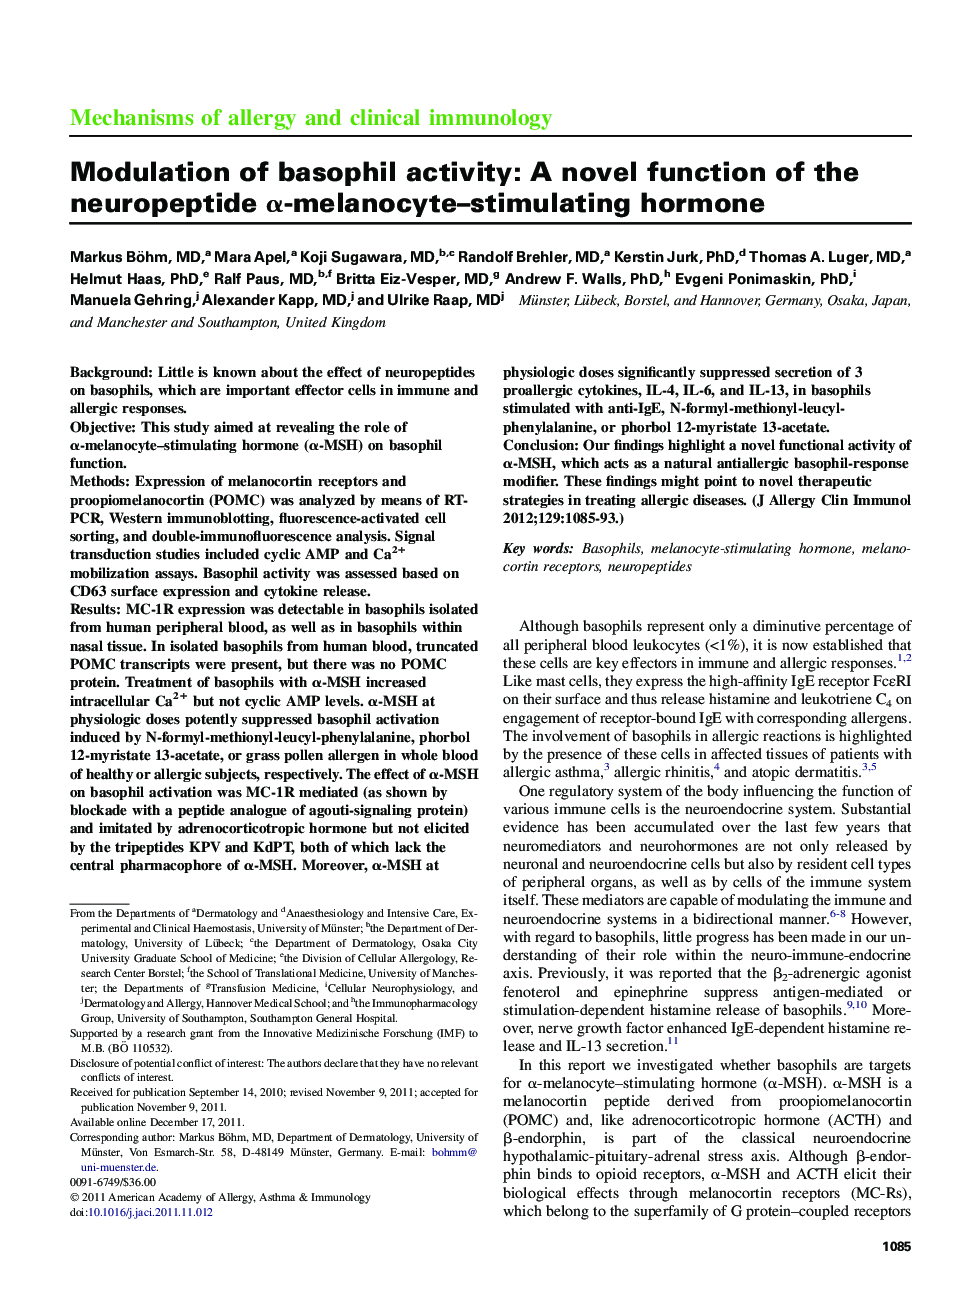 Mechanisms of allergy and clinical immunologyModulation of basophil activity: AÂ novel function of the neuropeptide Î±-melanocyte-stimulating hormone